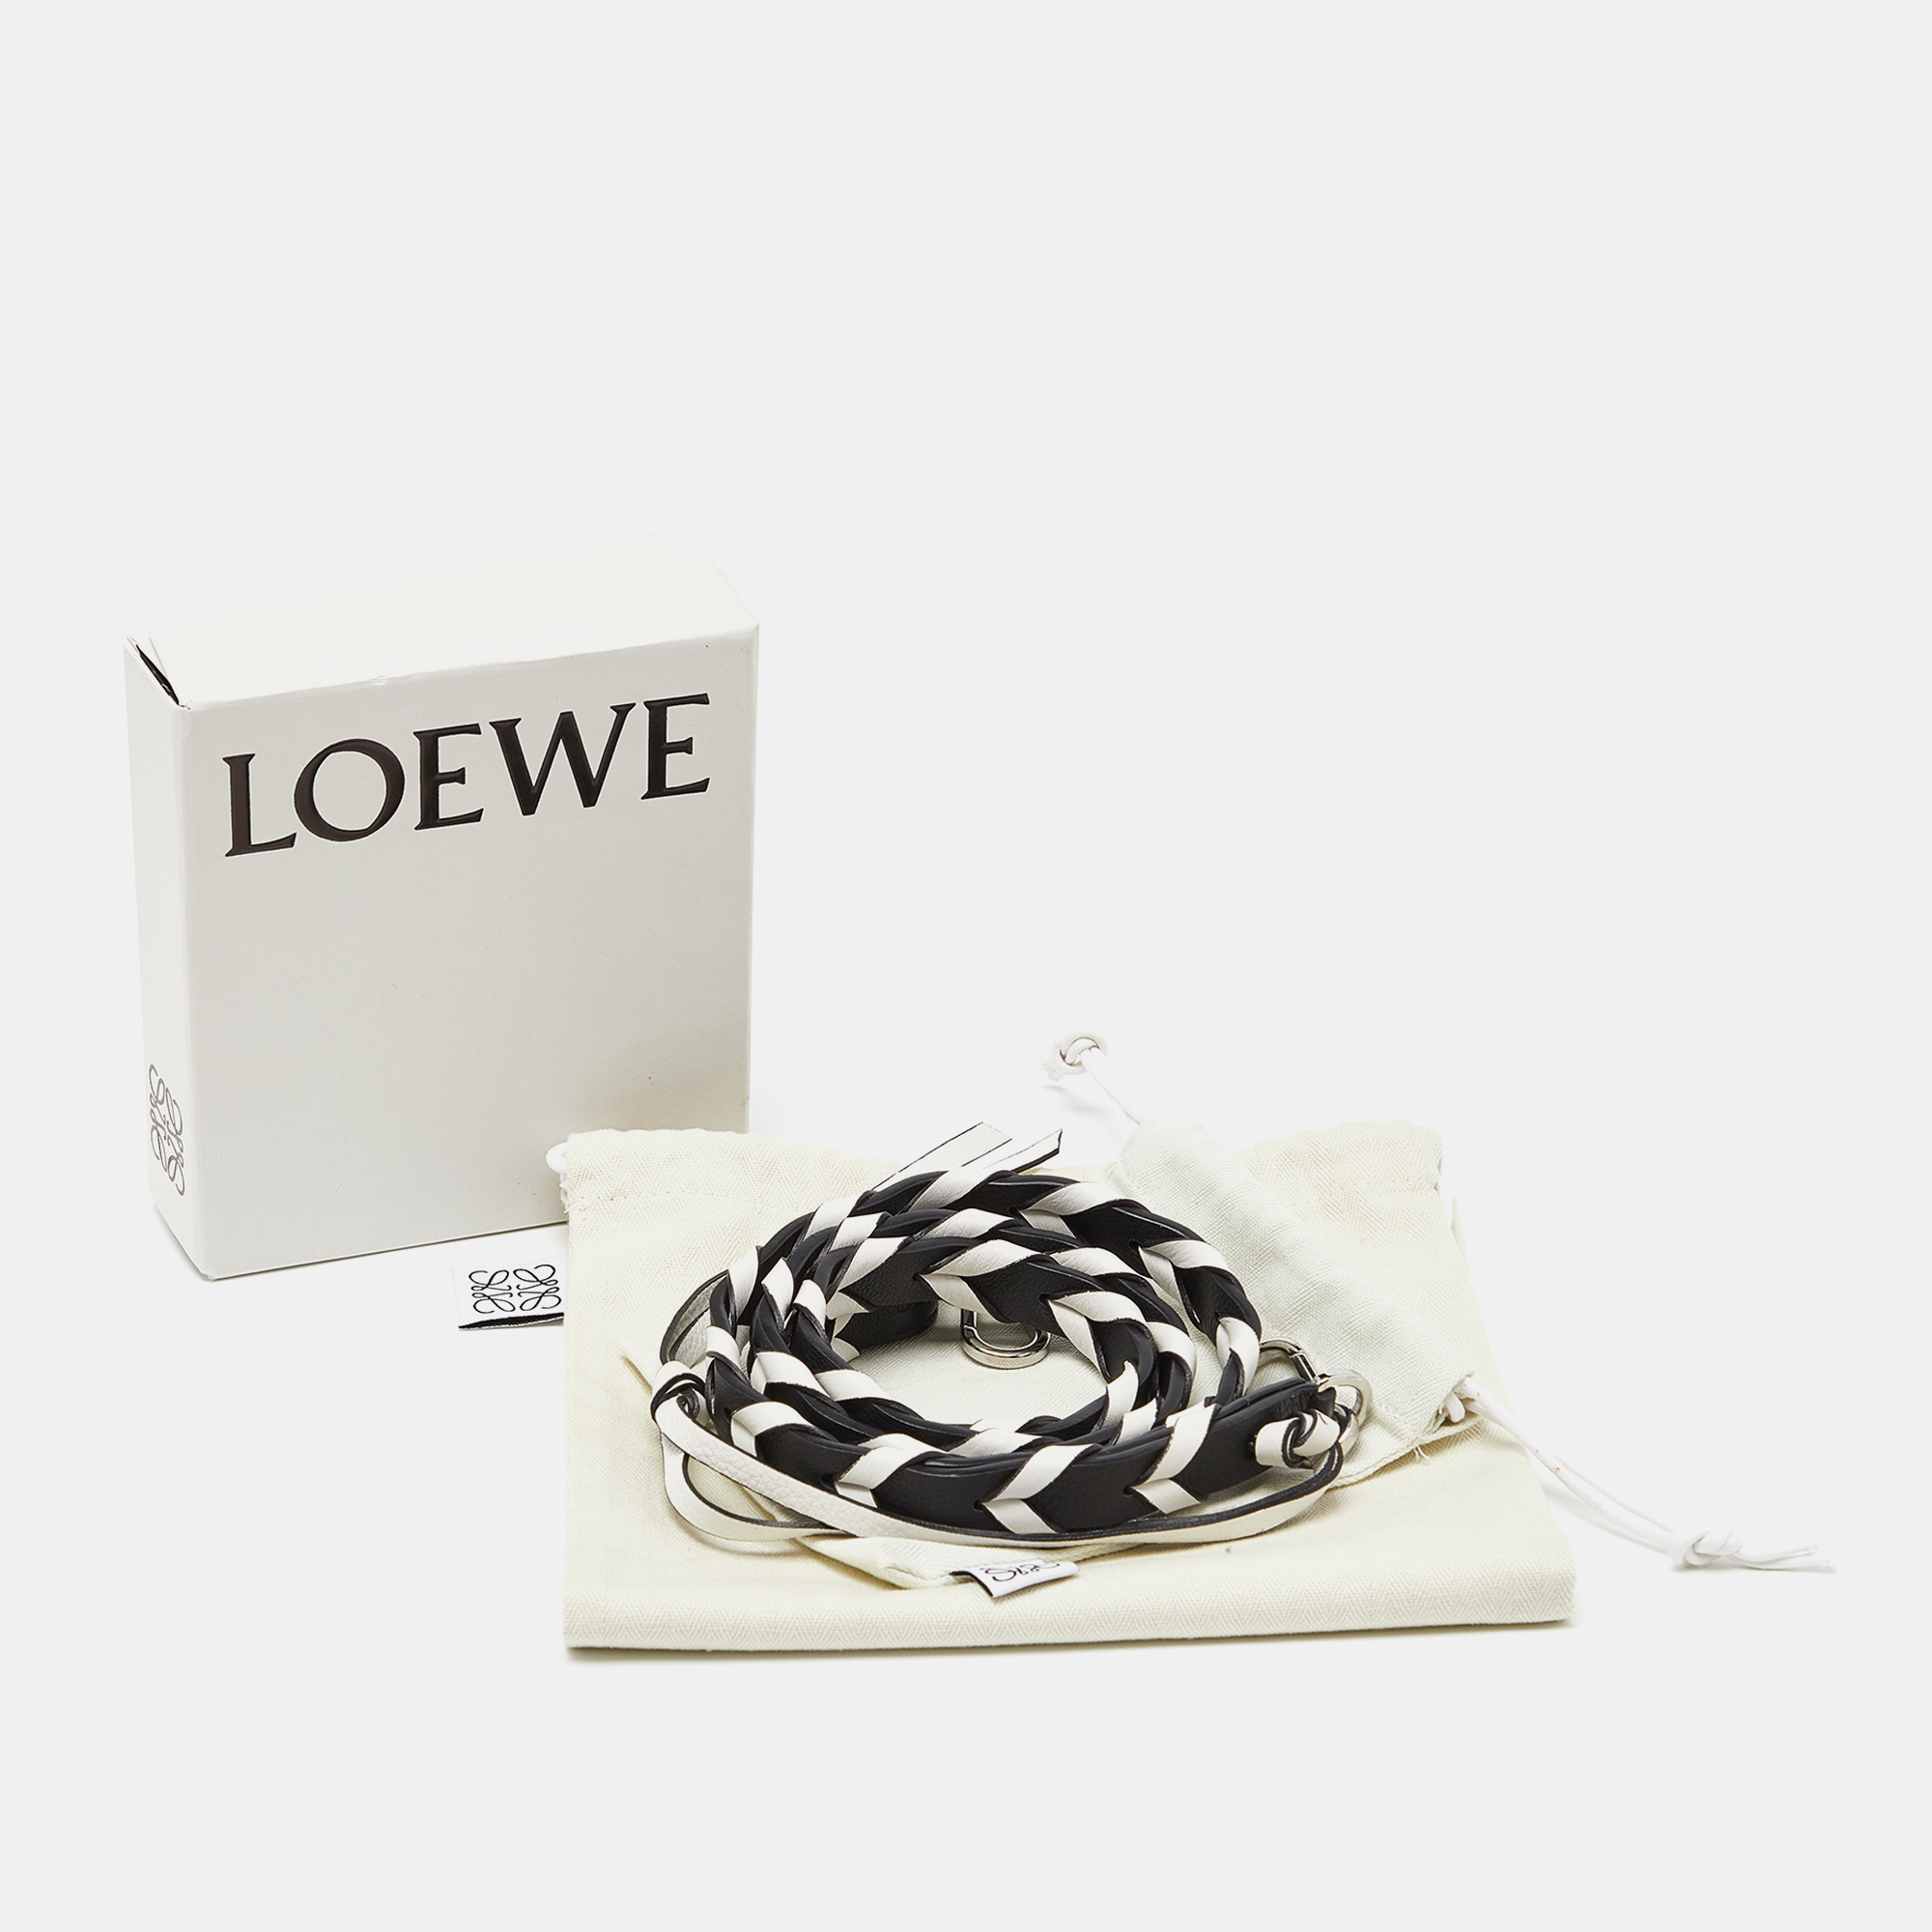 Loewe Black/White Leather Bag Strap